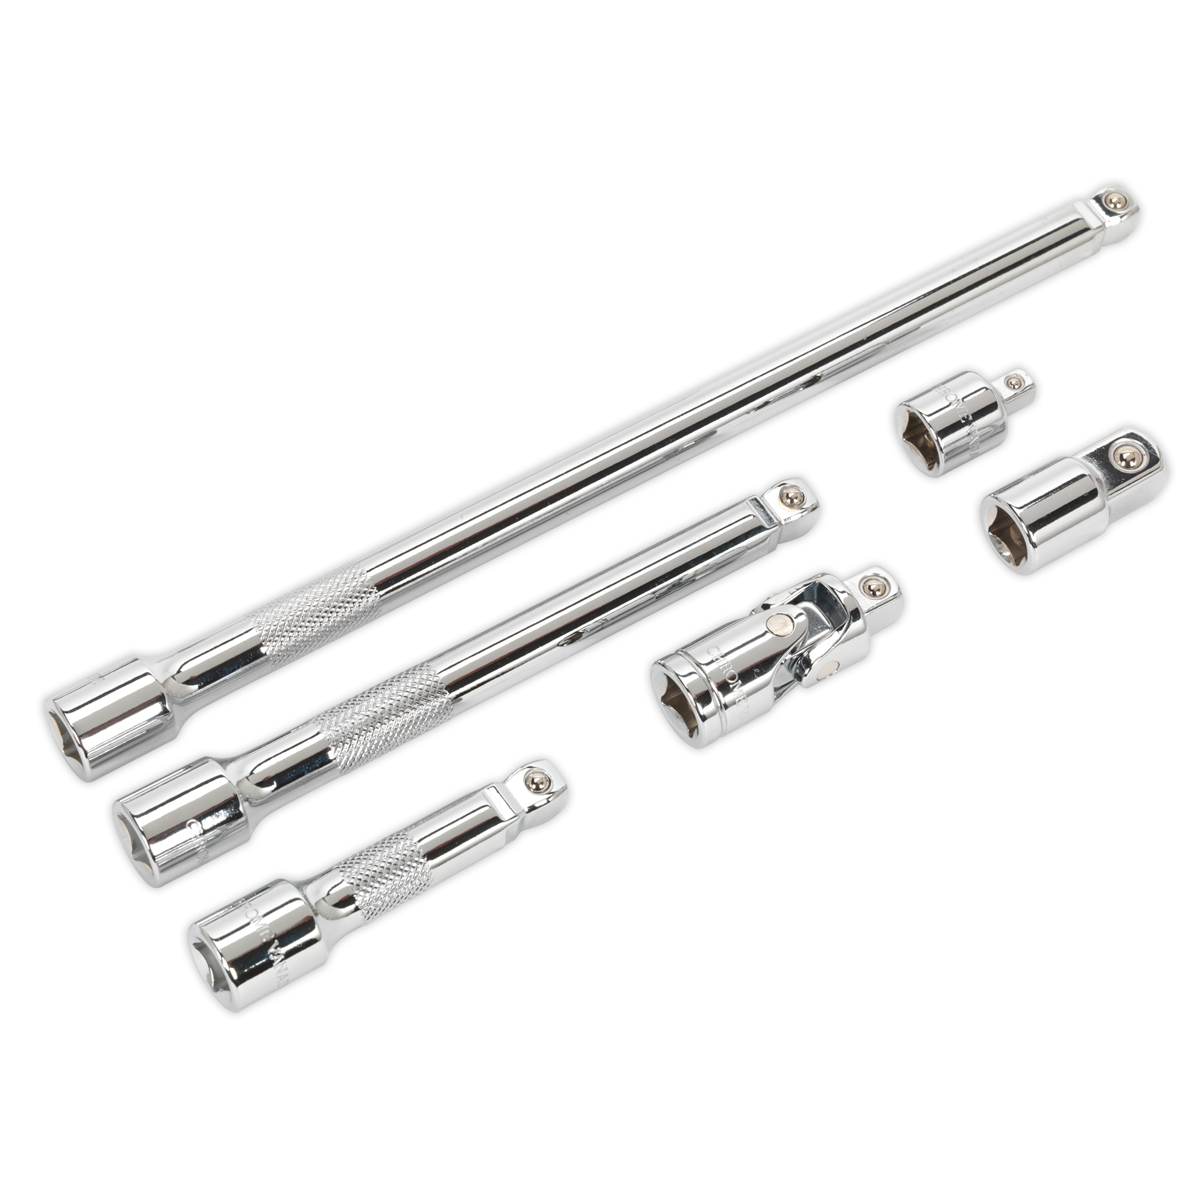 Sealey Wobble/Rigid Extension Bar, Adaptor & Universal Joint Set 6pc 3/8"Sq Drive